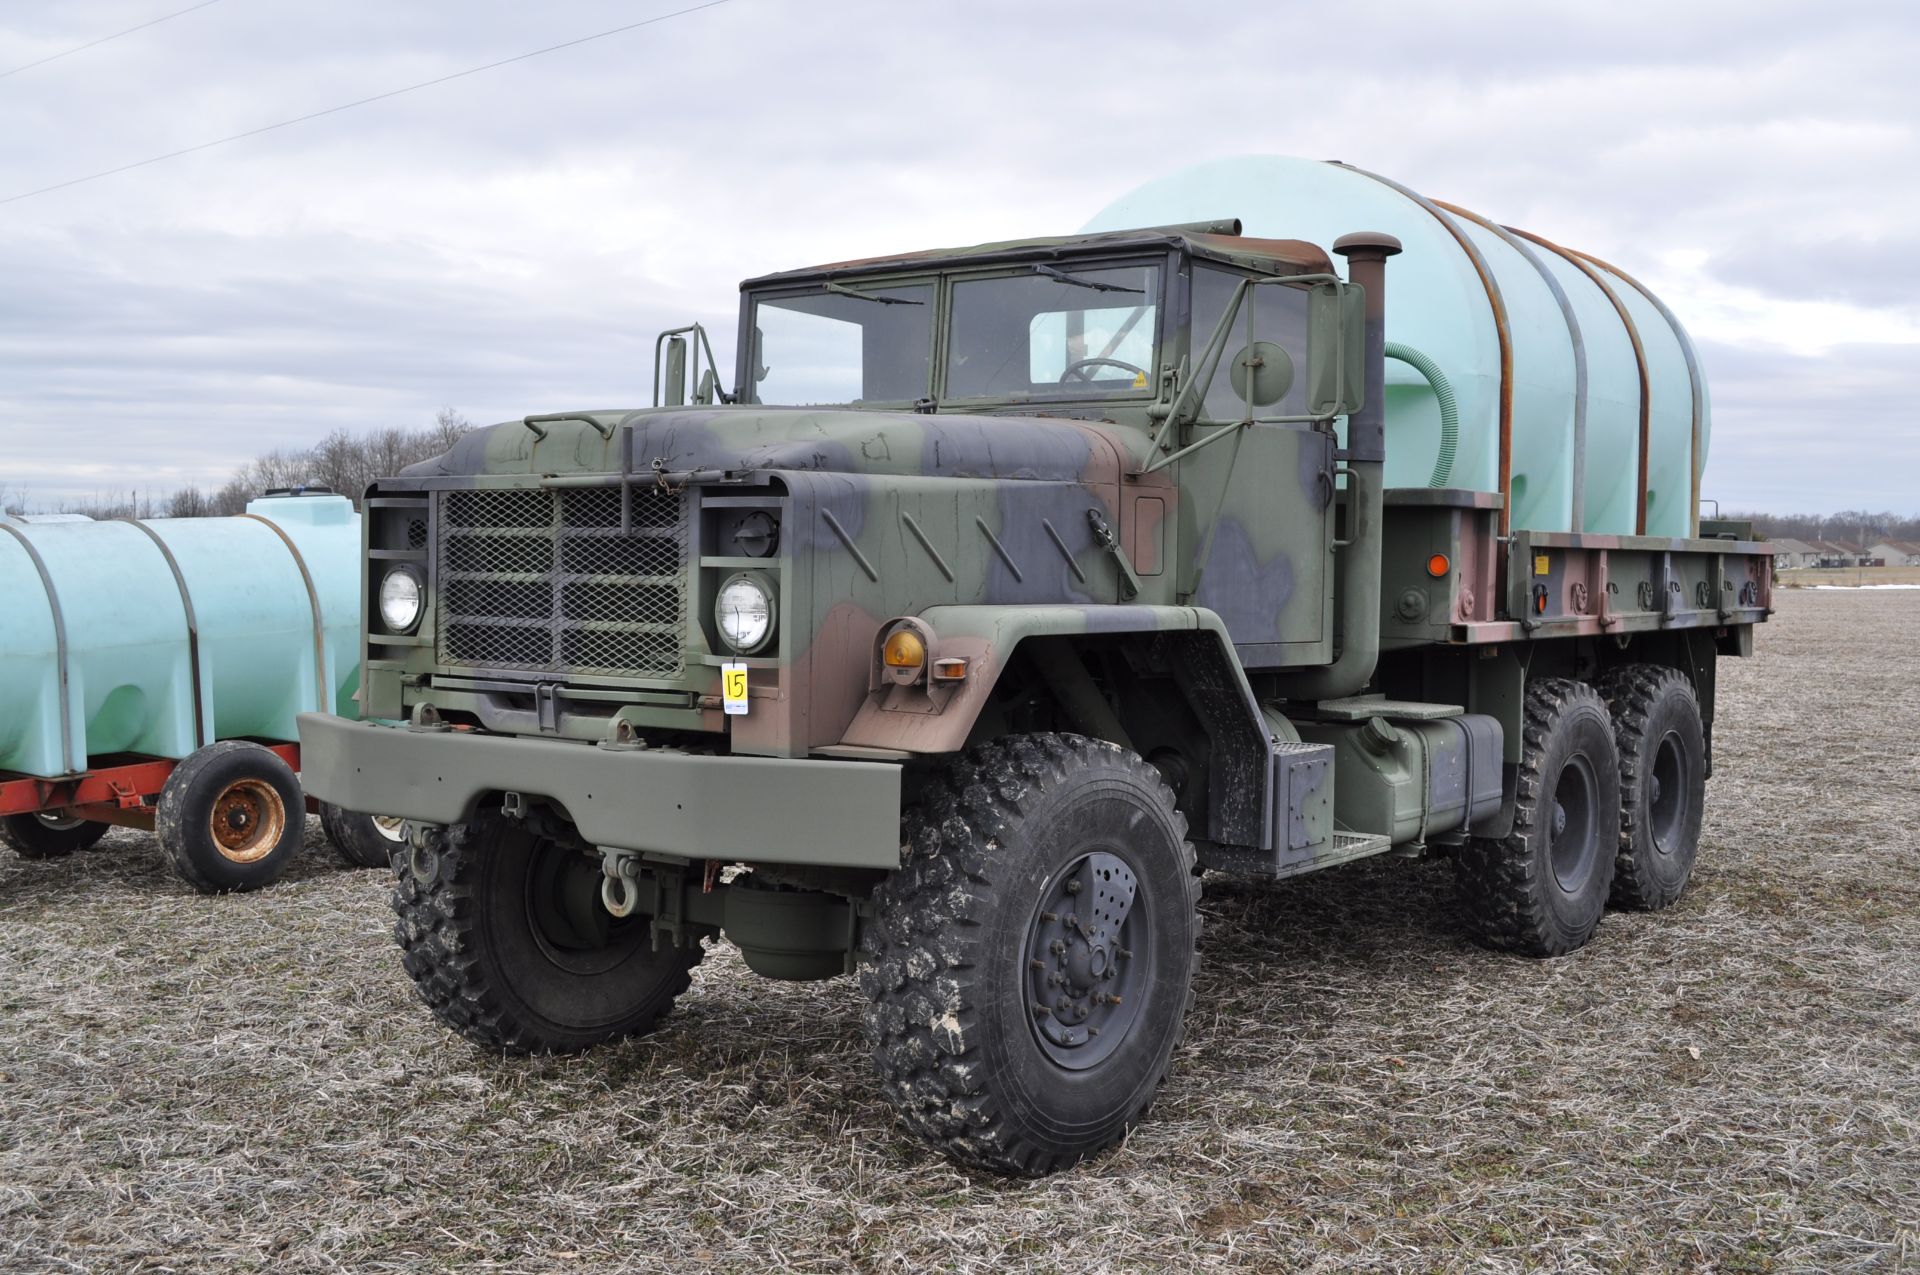 Harsco 5 Ton 6x6 military truck